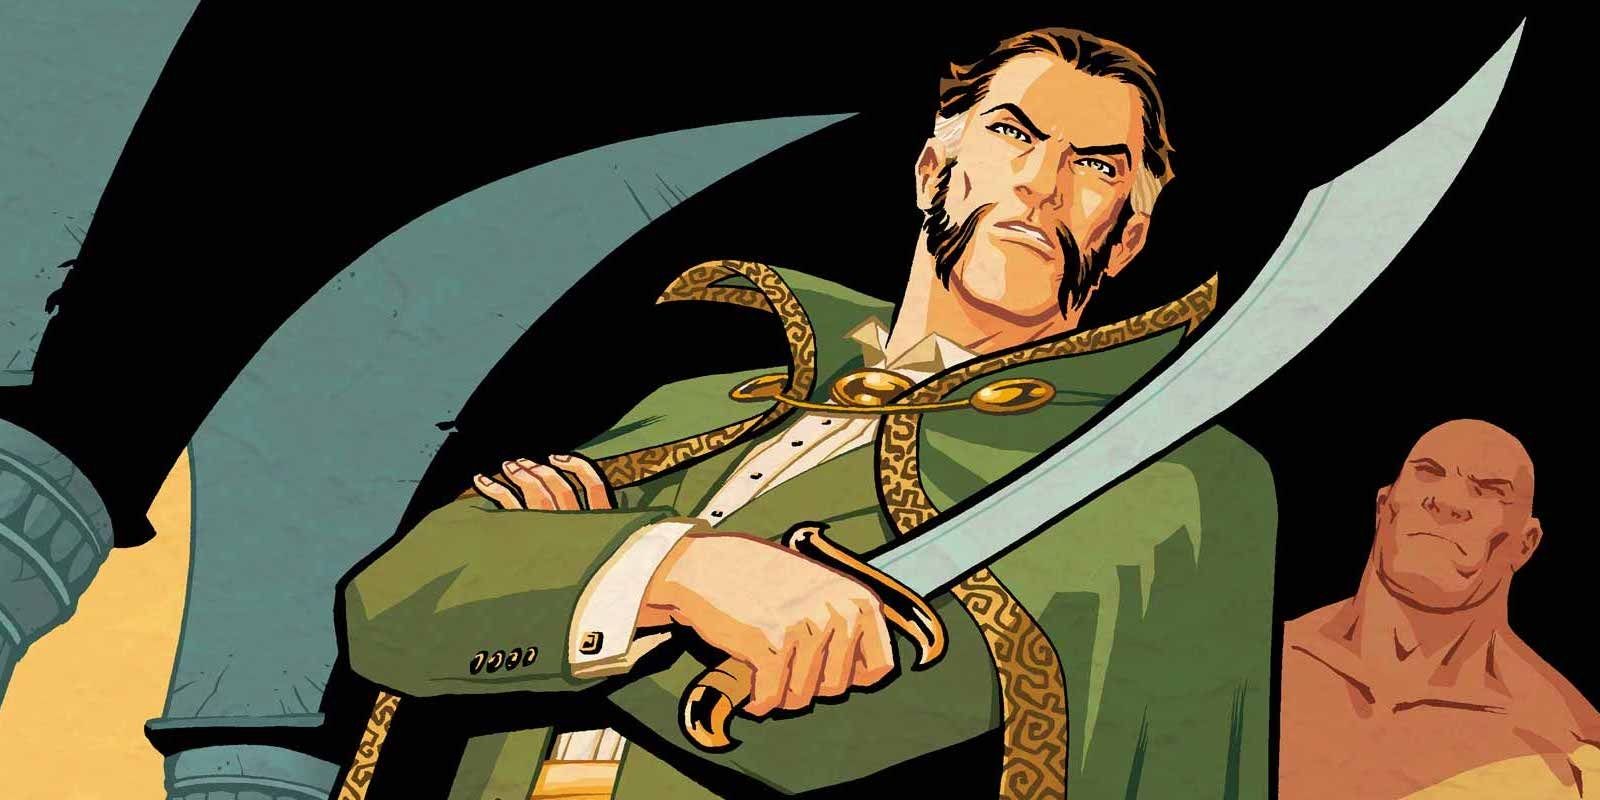 Ra’s al Ghul as he appears in early DC Comics